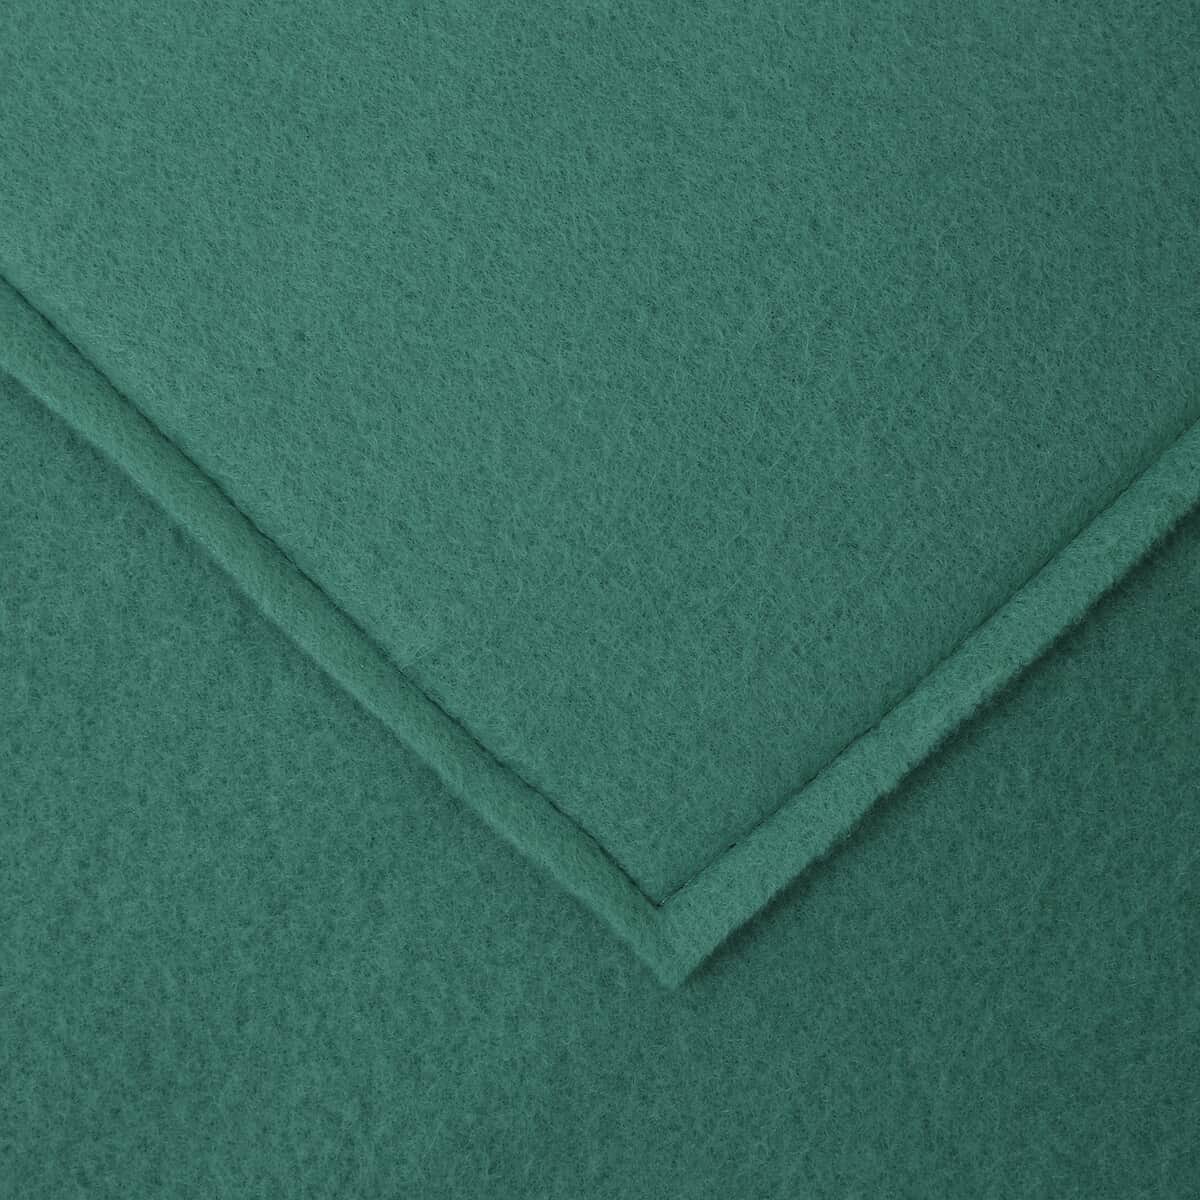 Homesmart 2 in 1 Green Solid Fleece Solid Travel Blanket with Folded Storage Pocket (Microfiber) image number 2